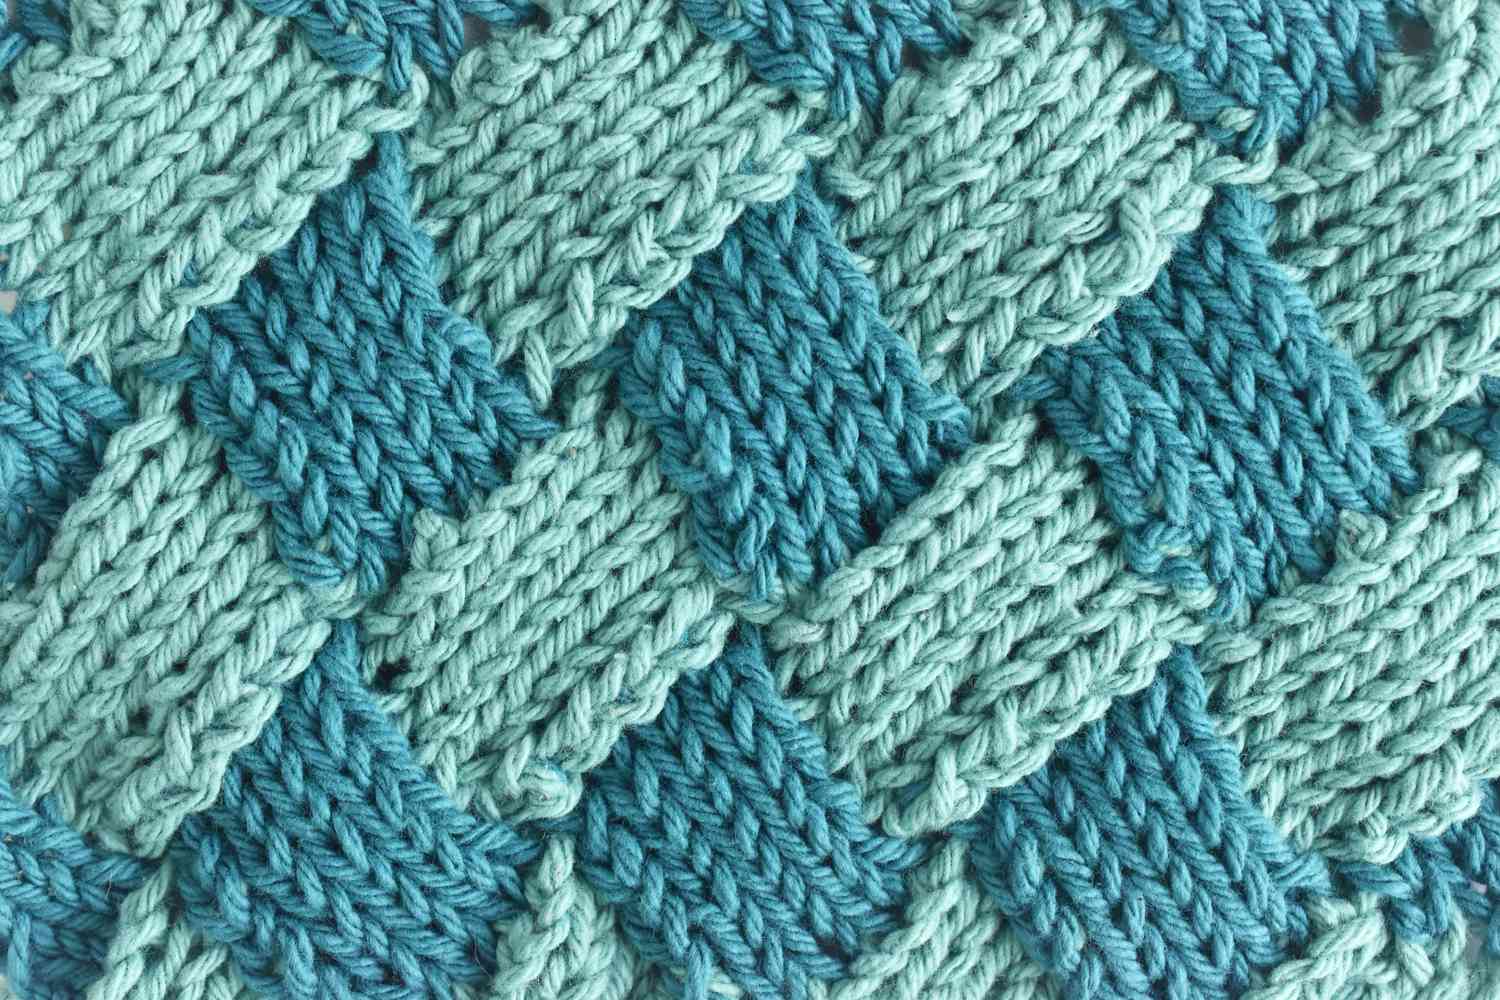 Entrelac编织样品在两种深浅的蓝绿色